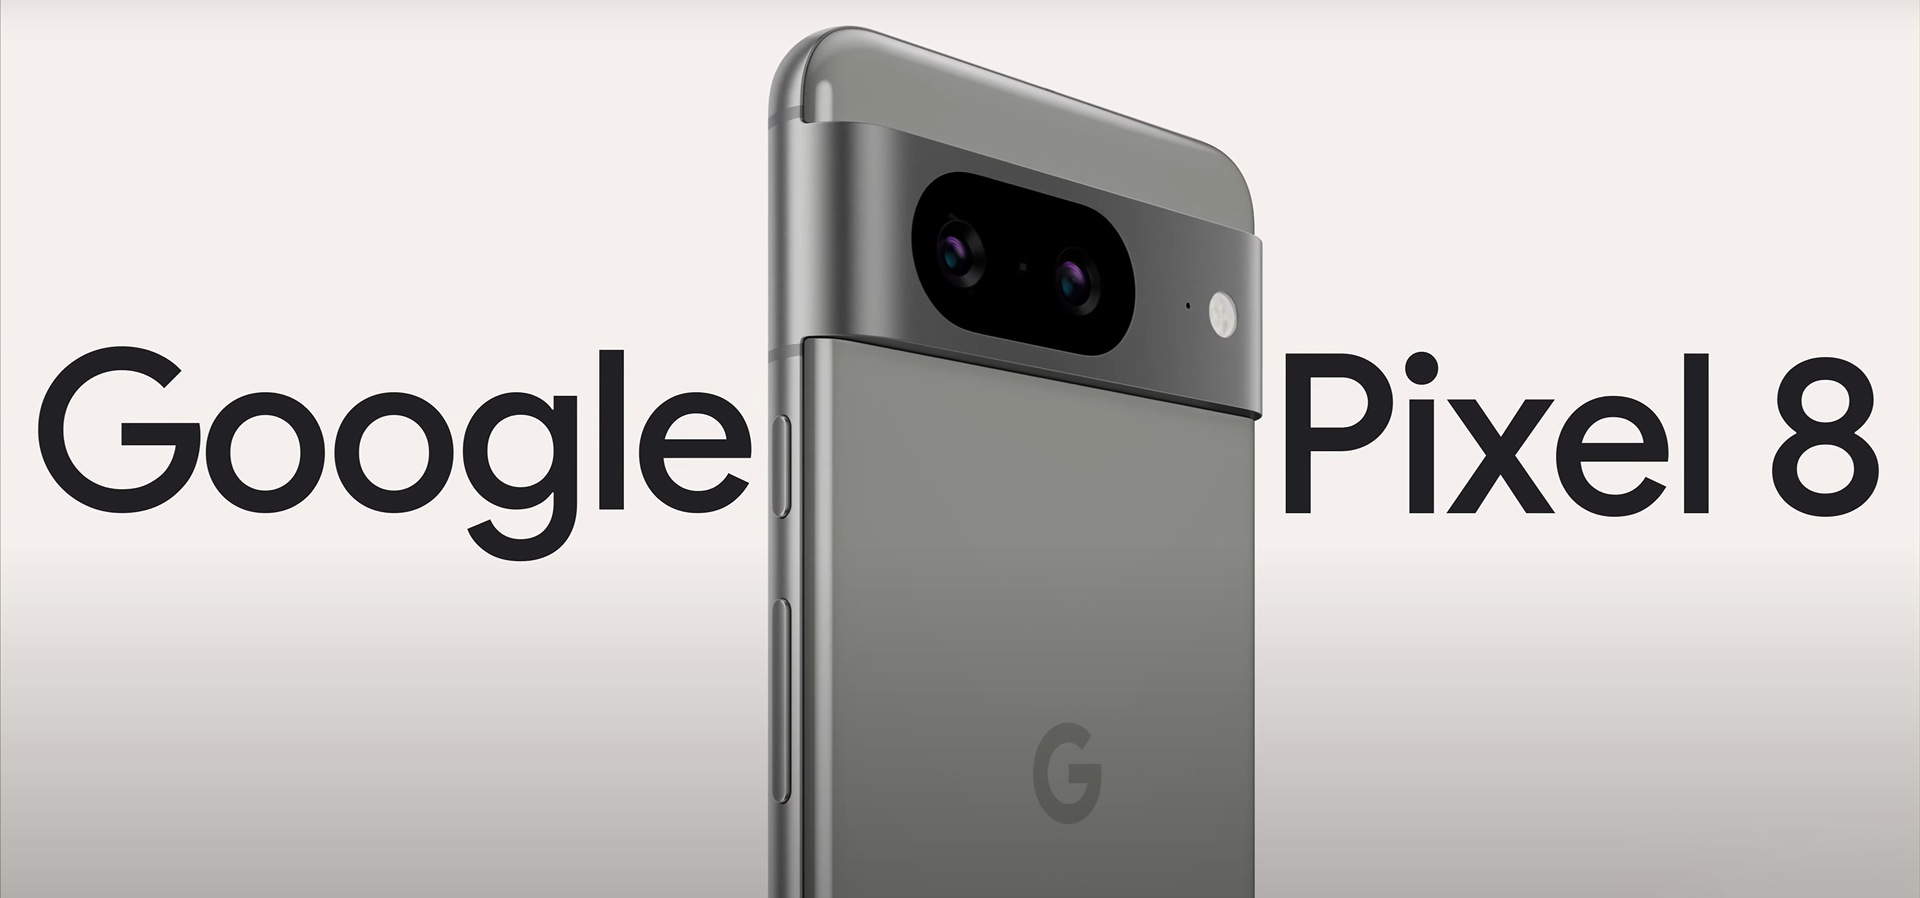 Google Pixel 8: The base model is good value for money